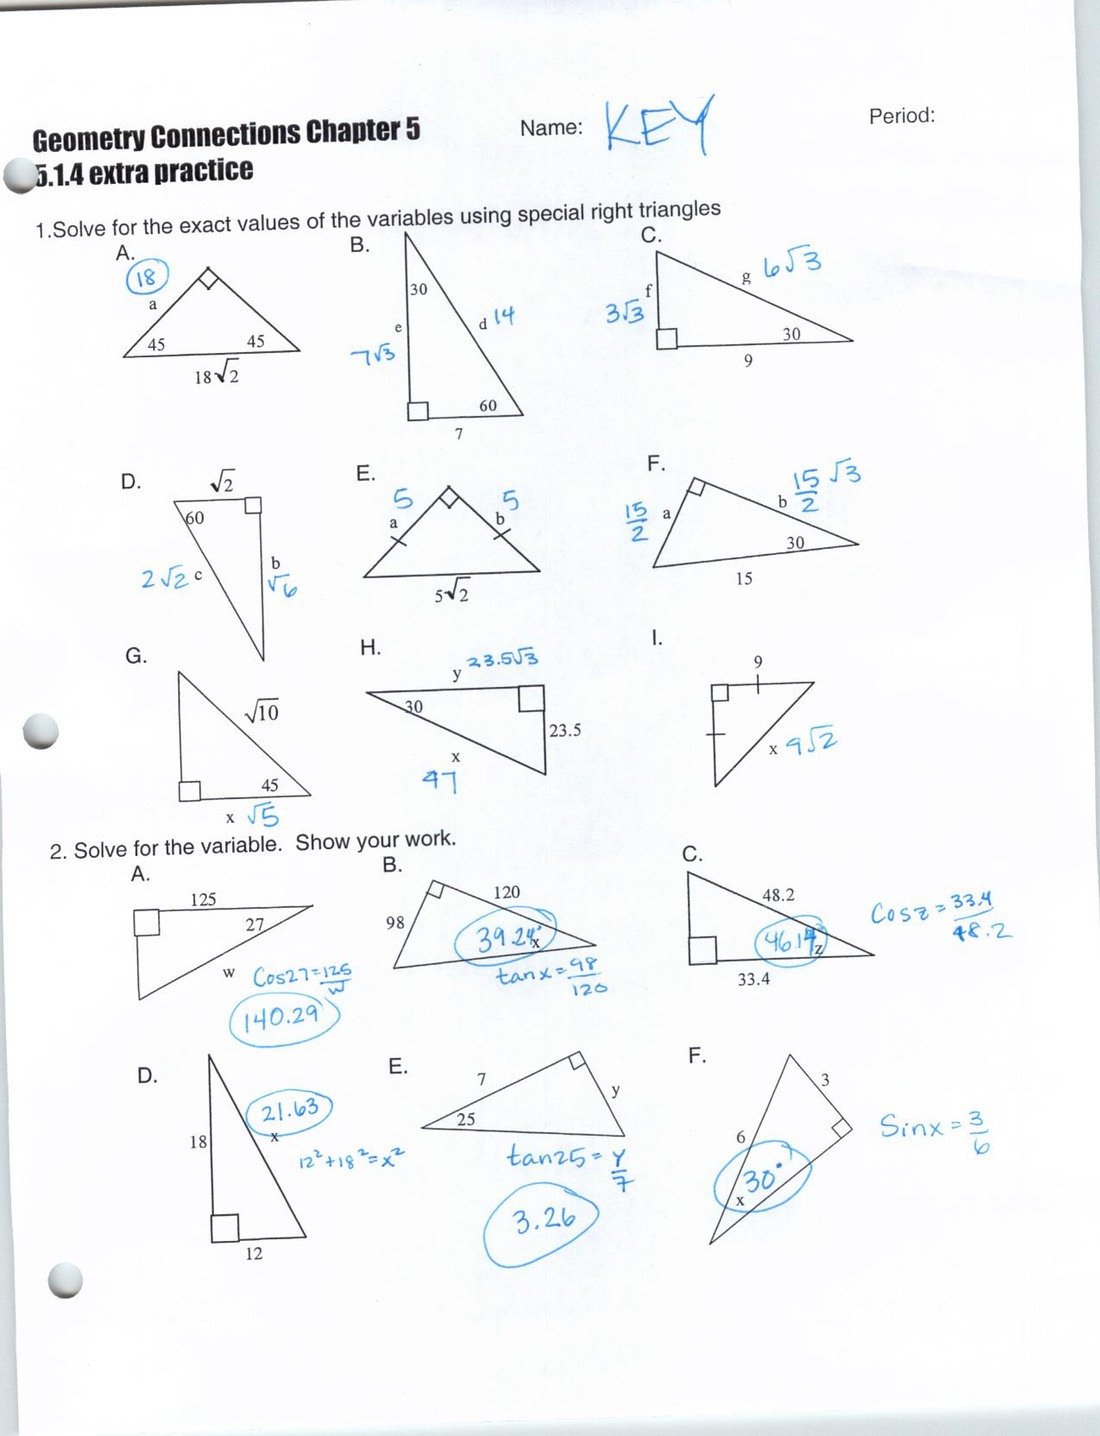 similarity common core geometry homework answers